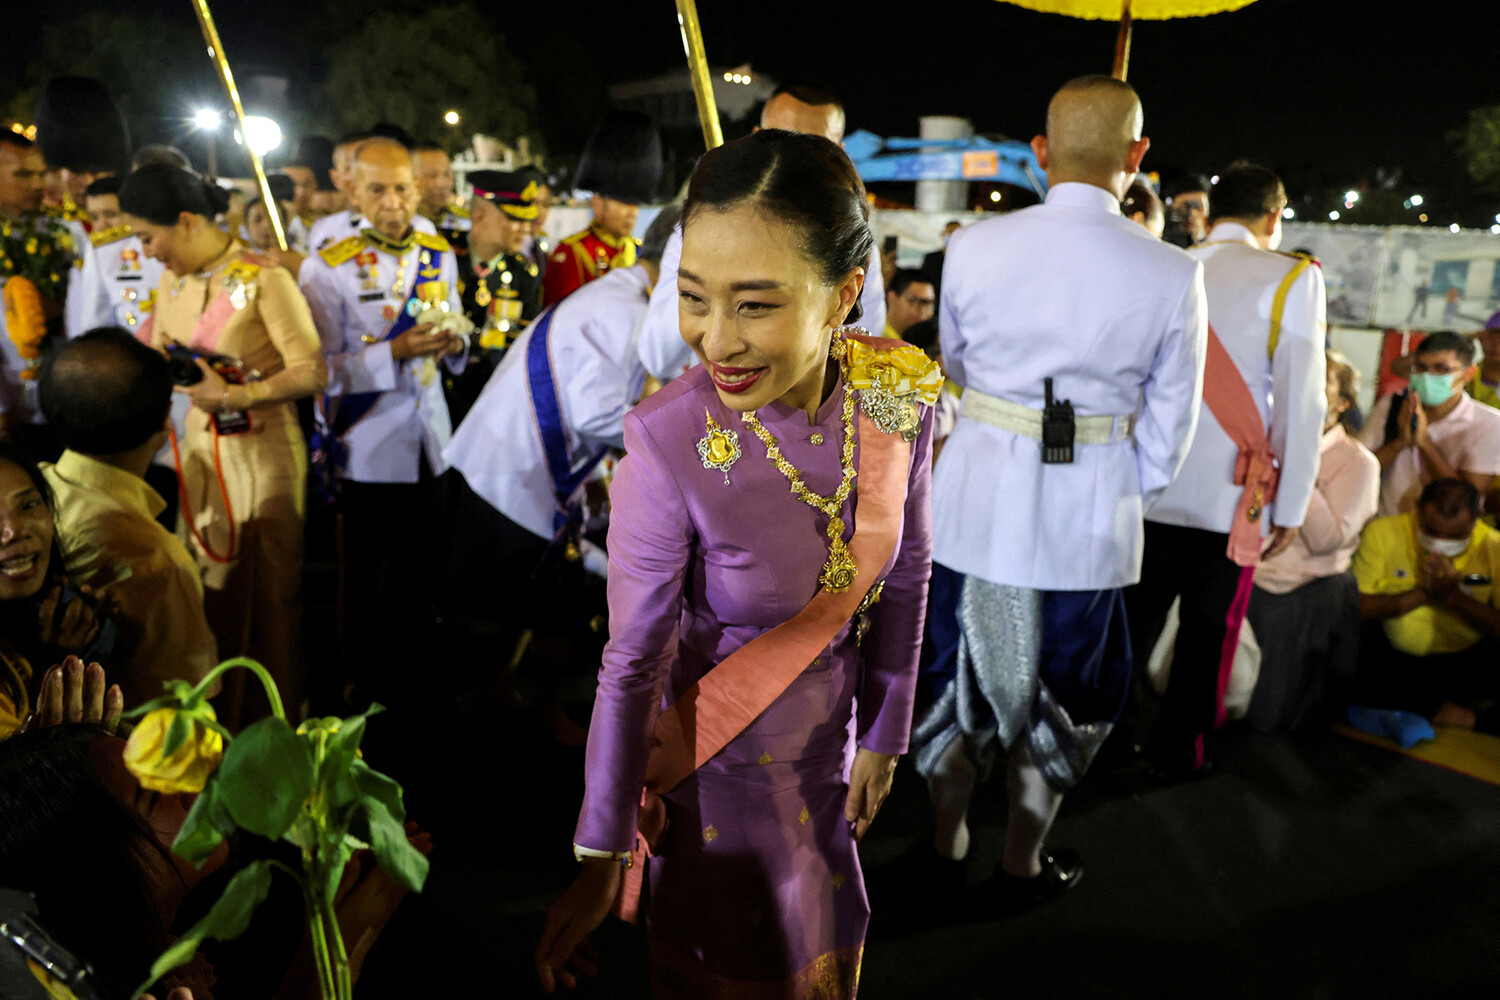 дочь короля тайланда